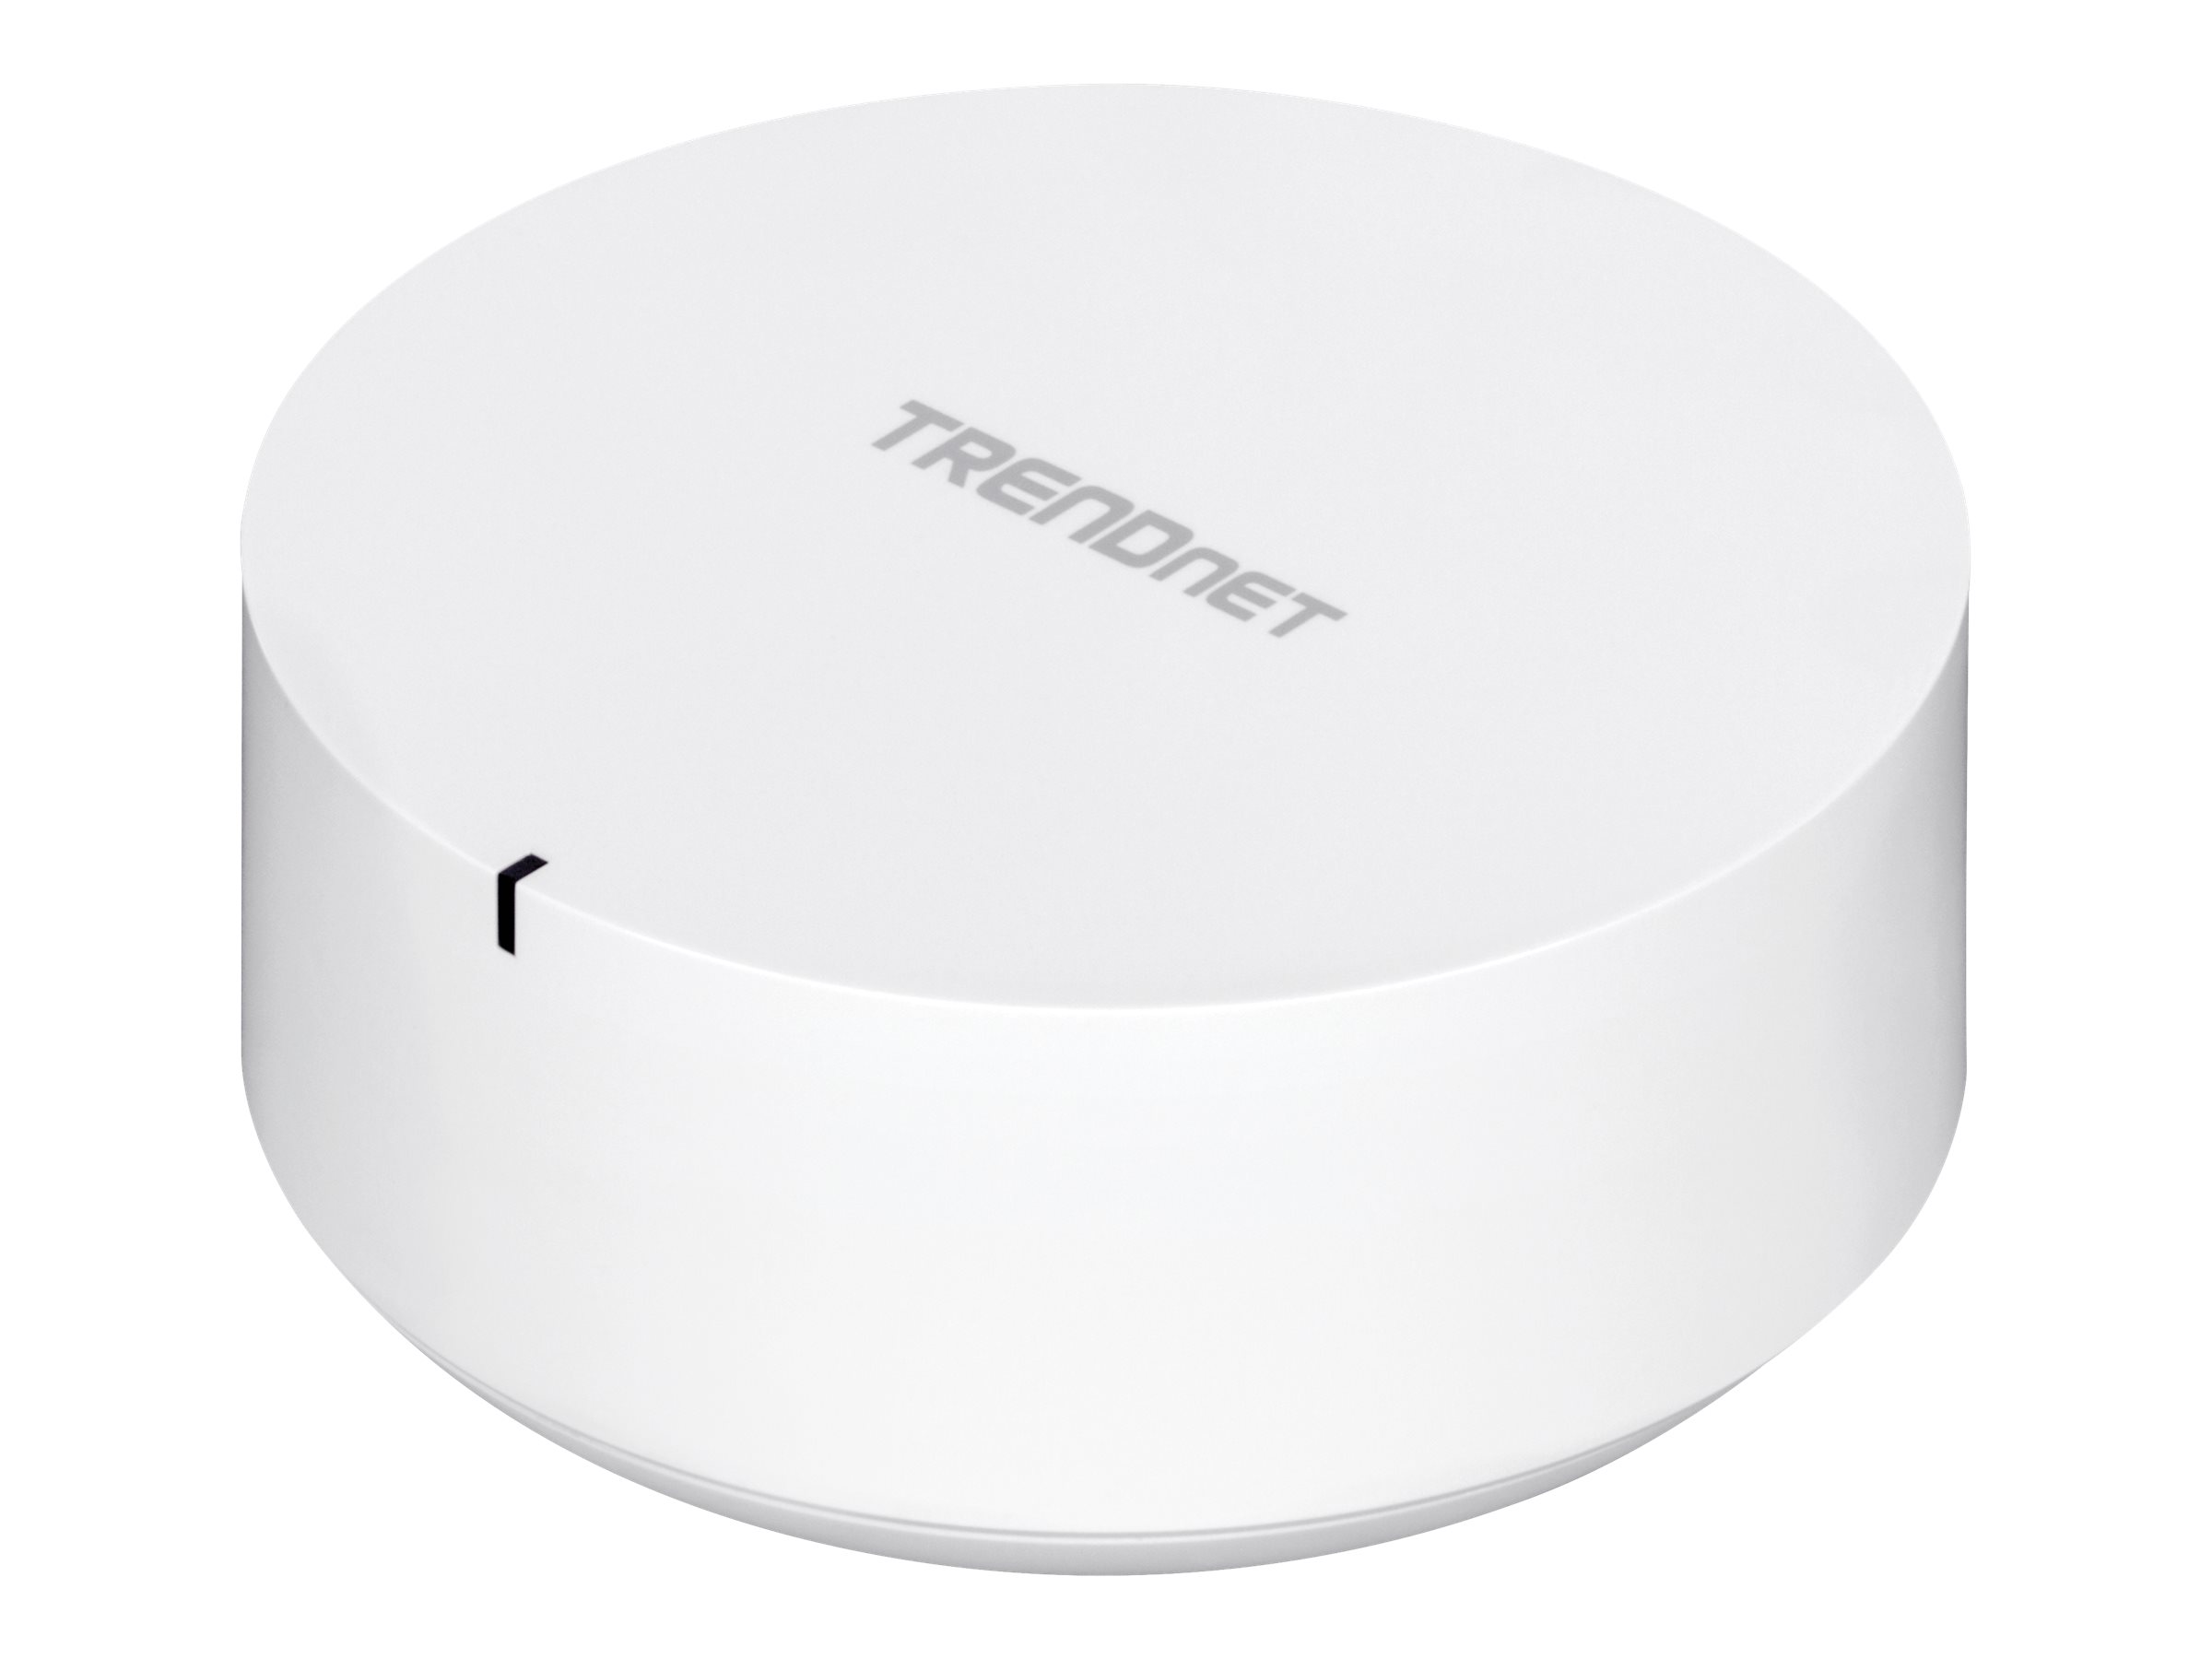 TRENDnet TEW-830MDR - Wireless router